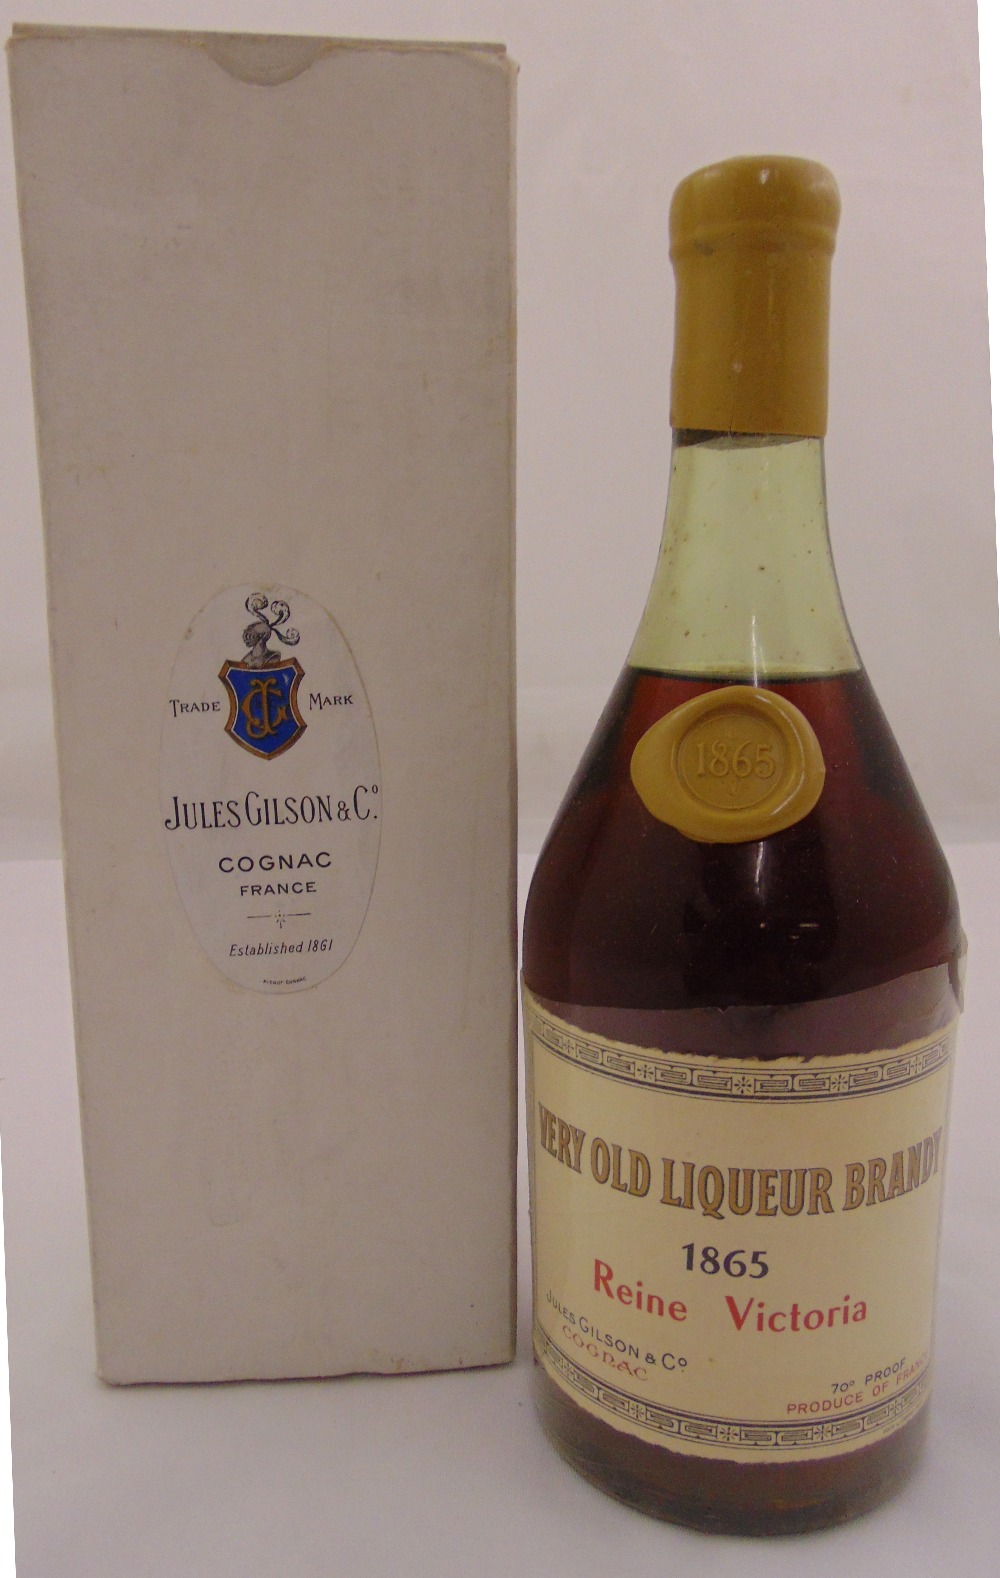 Jules Gilson & Co. 1865 Cognac Reine Victoria, 70cl in original packaging